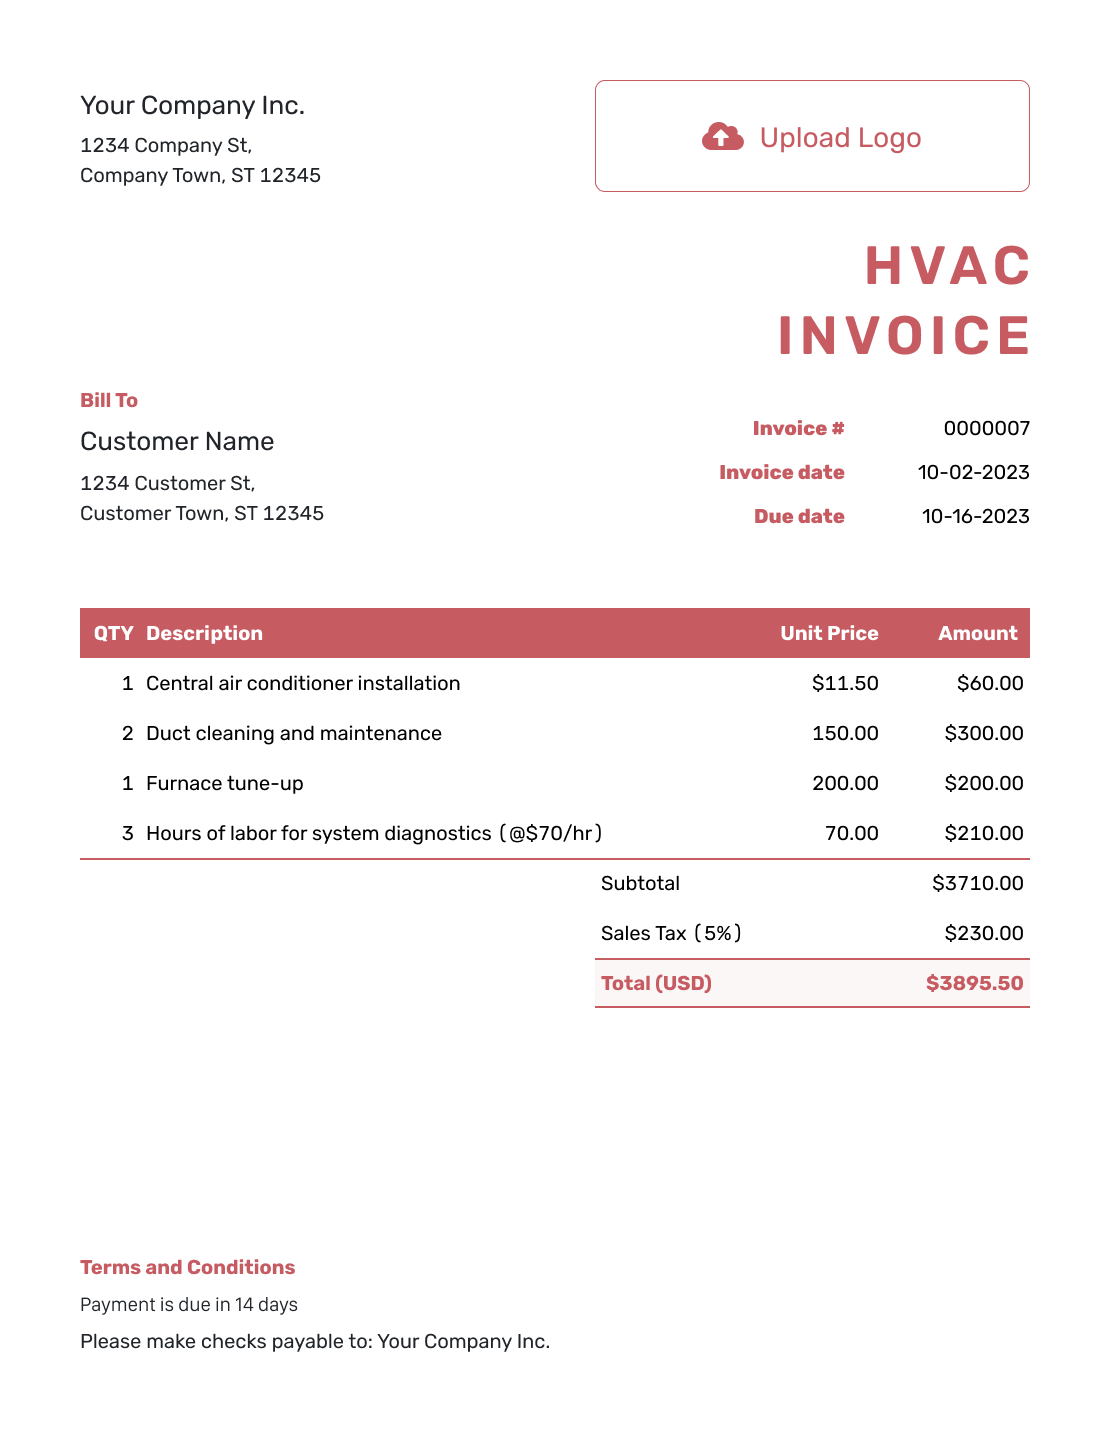 Itemized HVAC Invoice Template